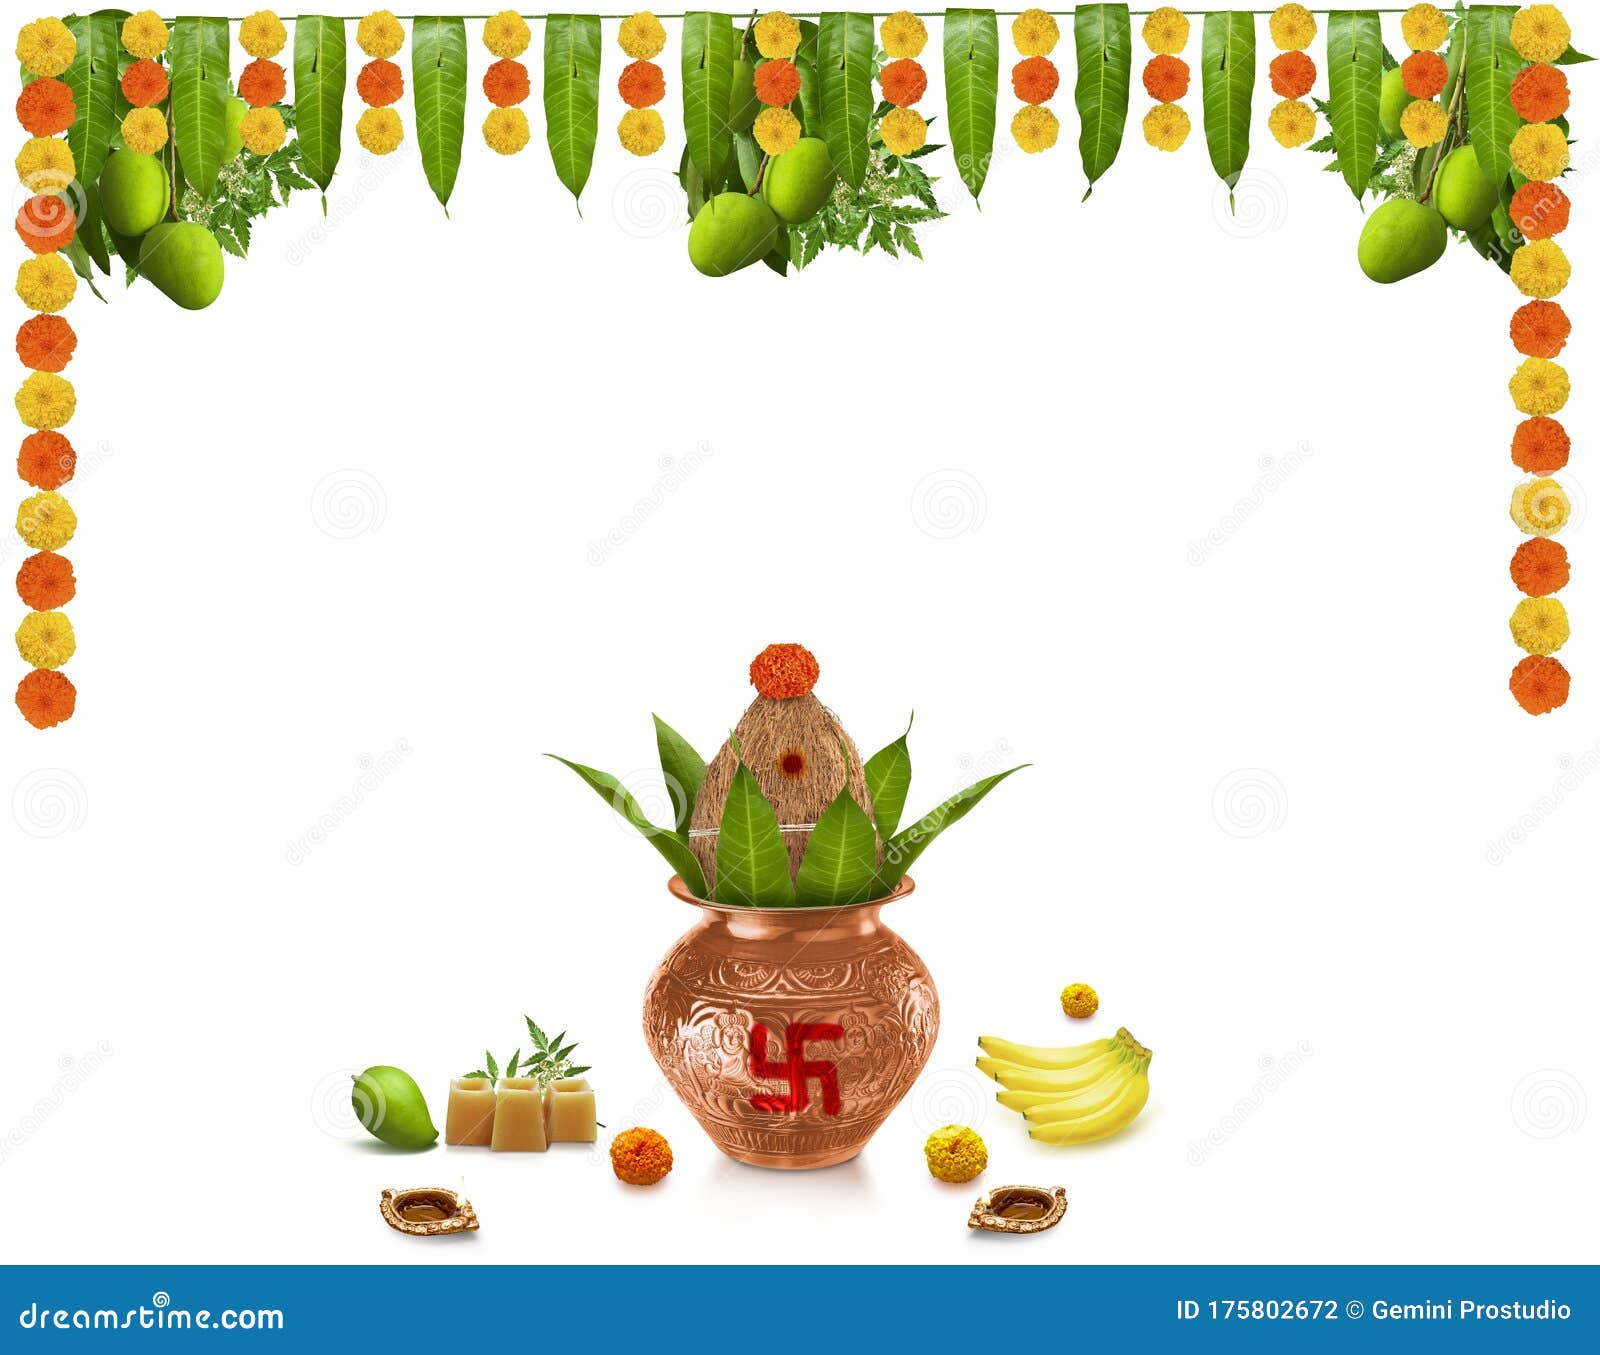 Happy Ugadi Greeting Card Background with Decorated Kalash and Mangoes